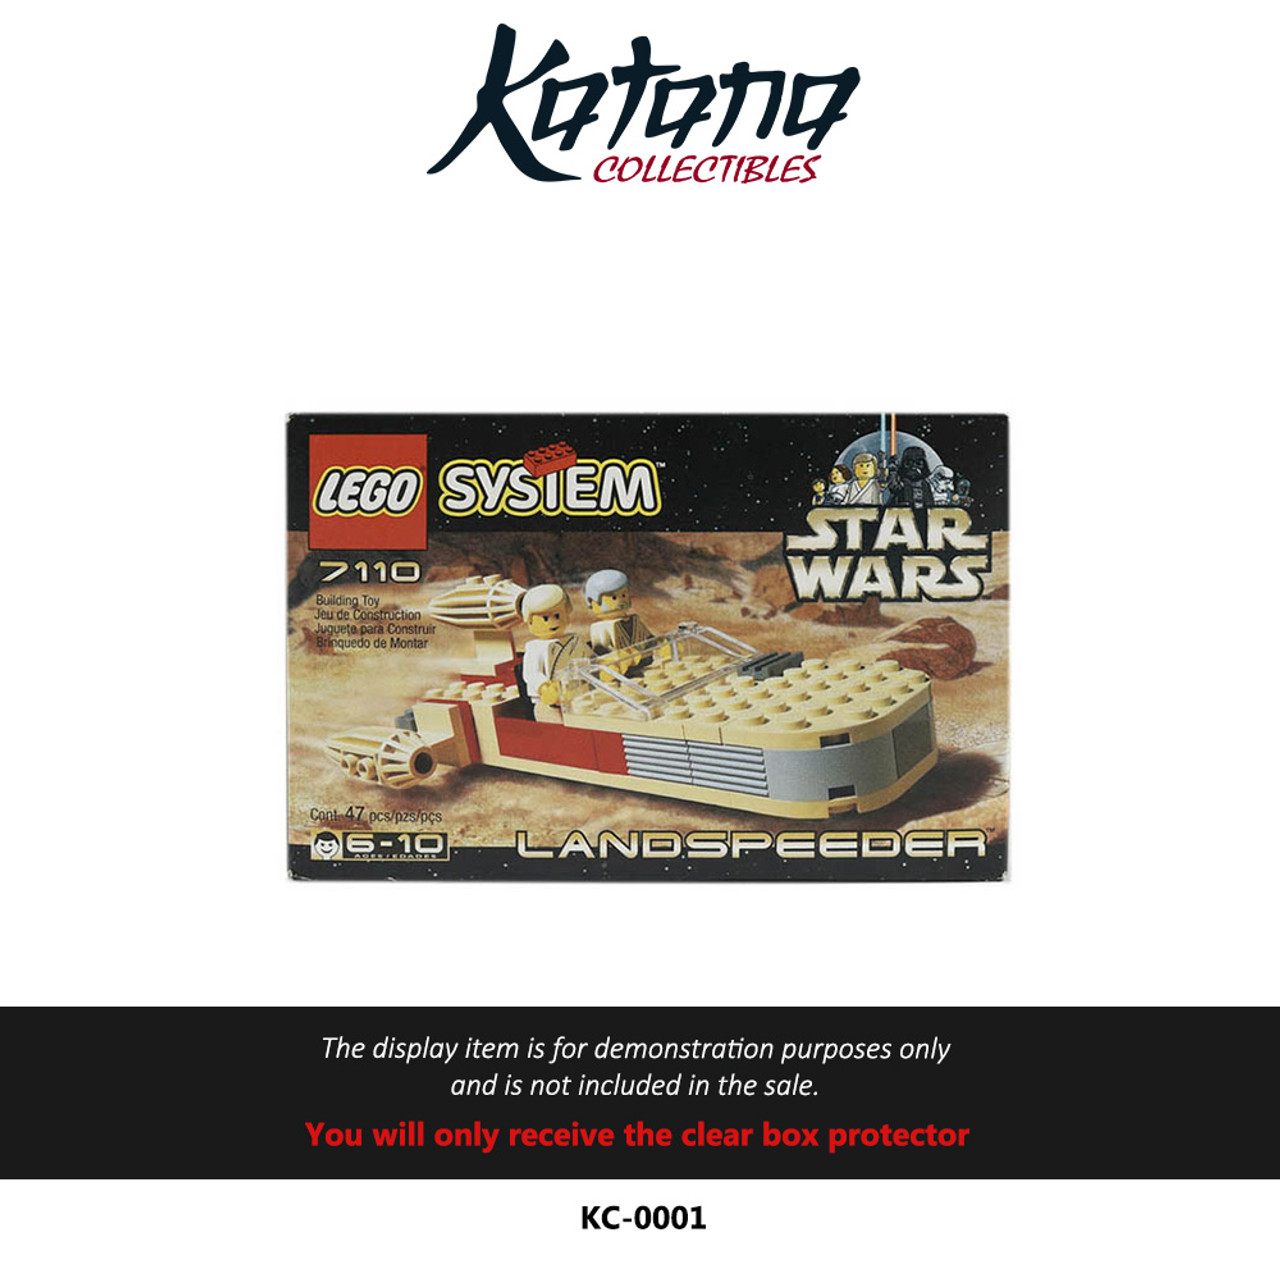 Katana Collectibles Protector For Lego Star Wars 7110 Luke's Landspeeder